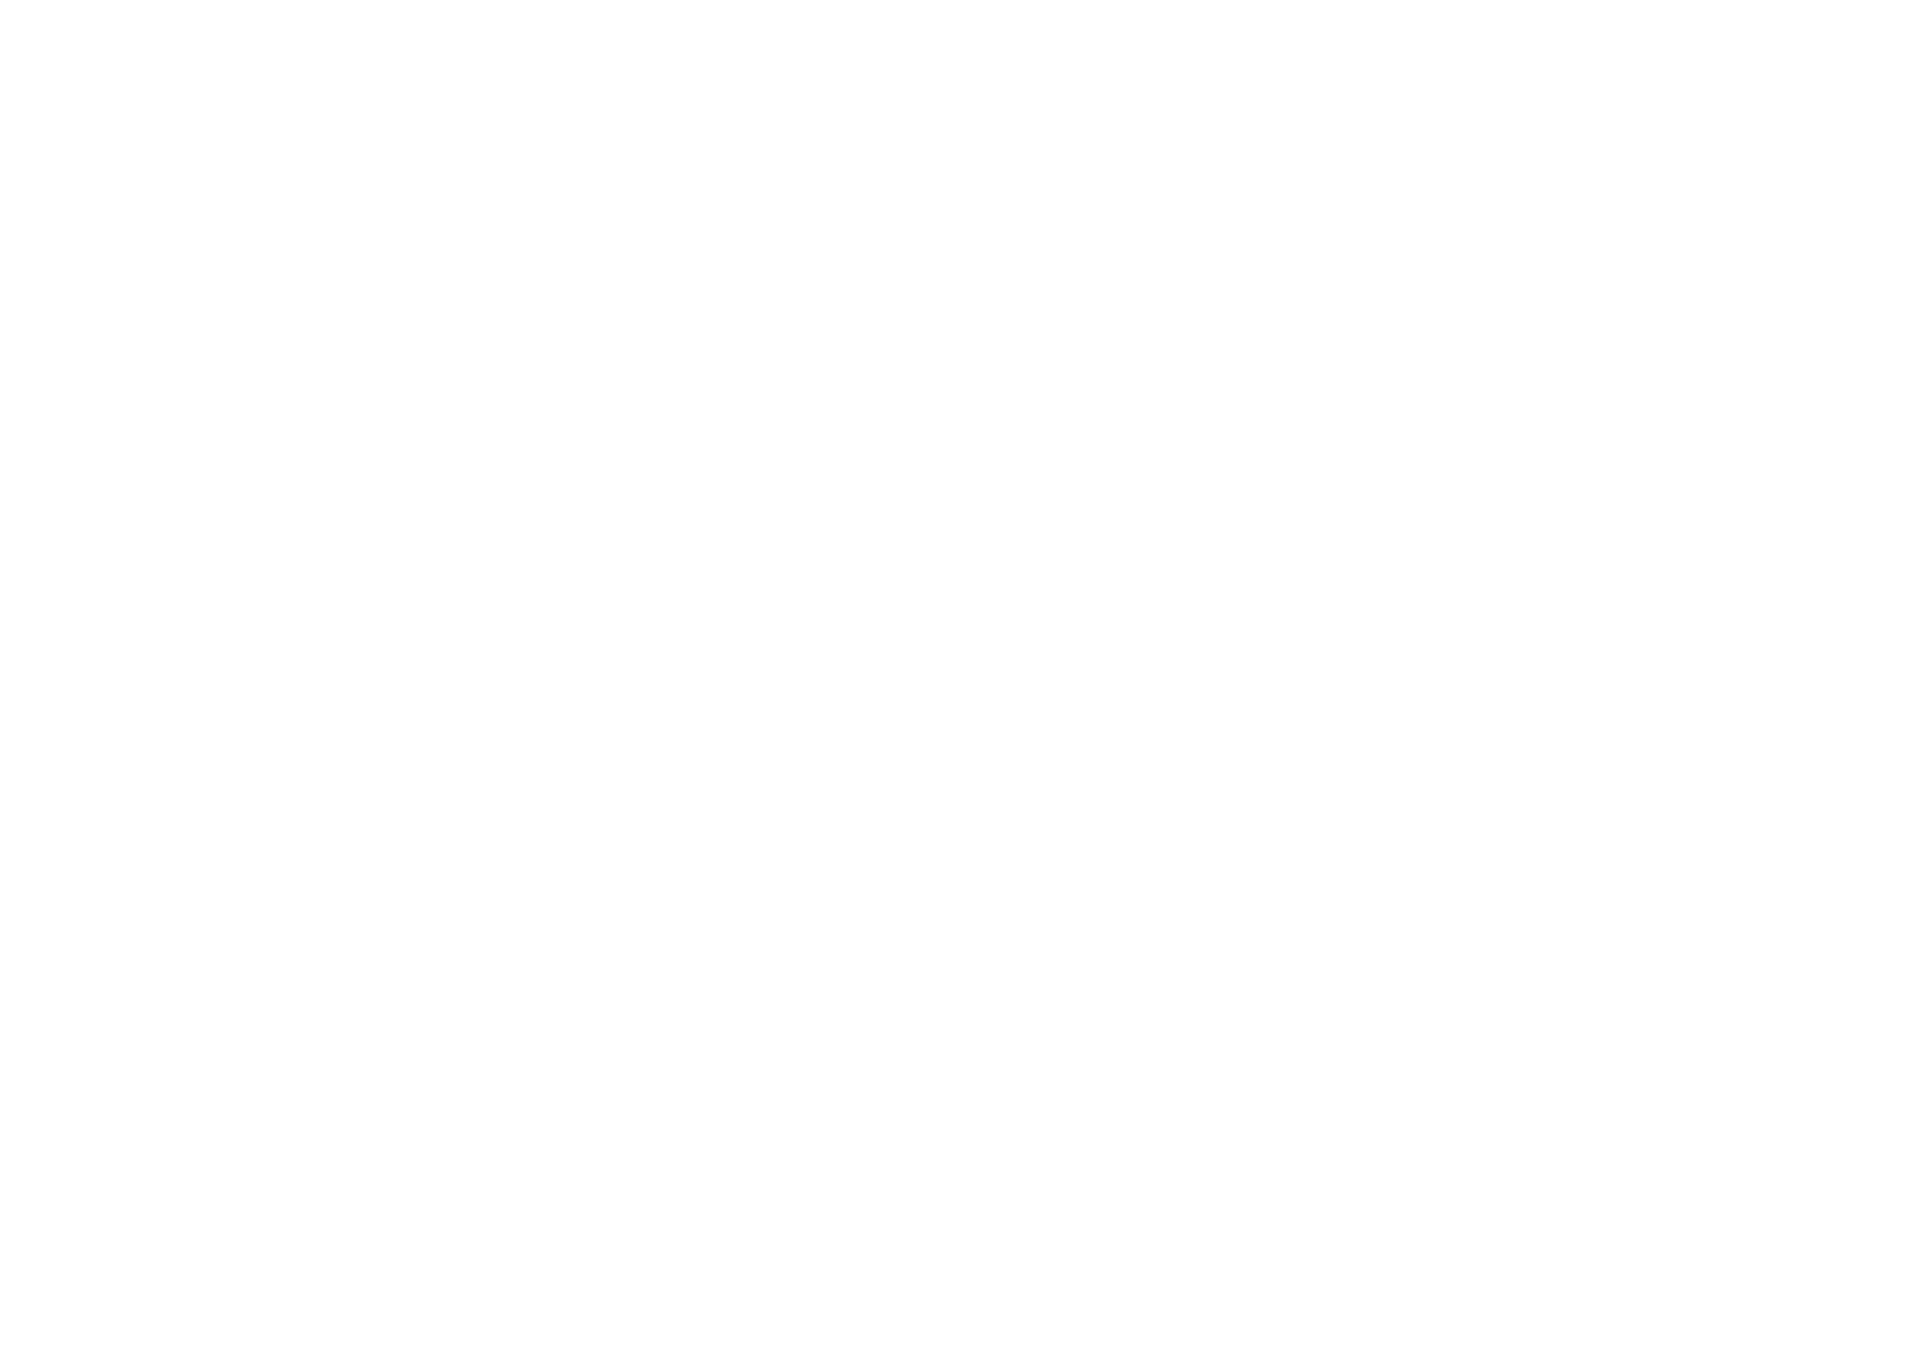 Mary cherry australia